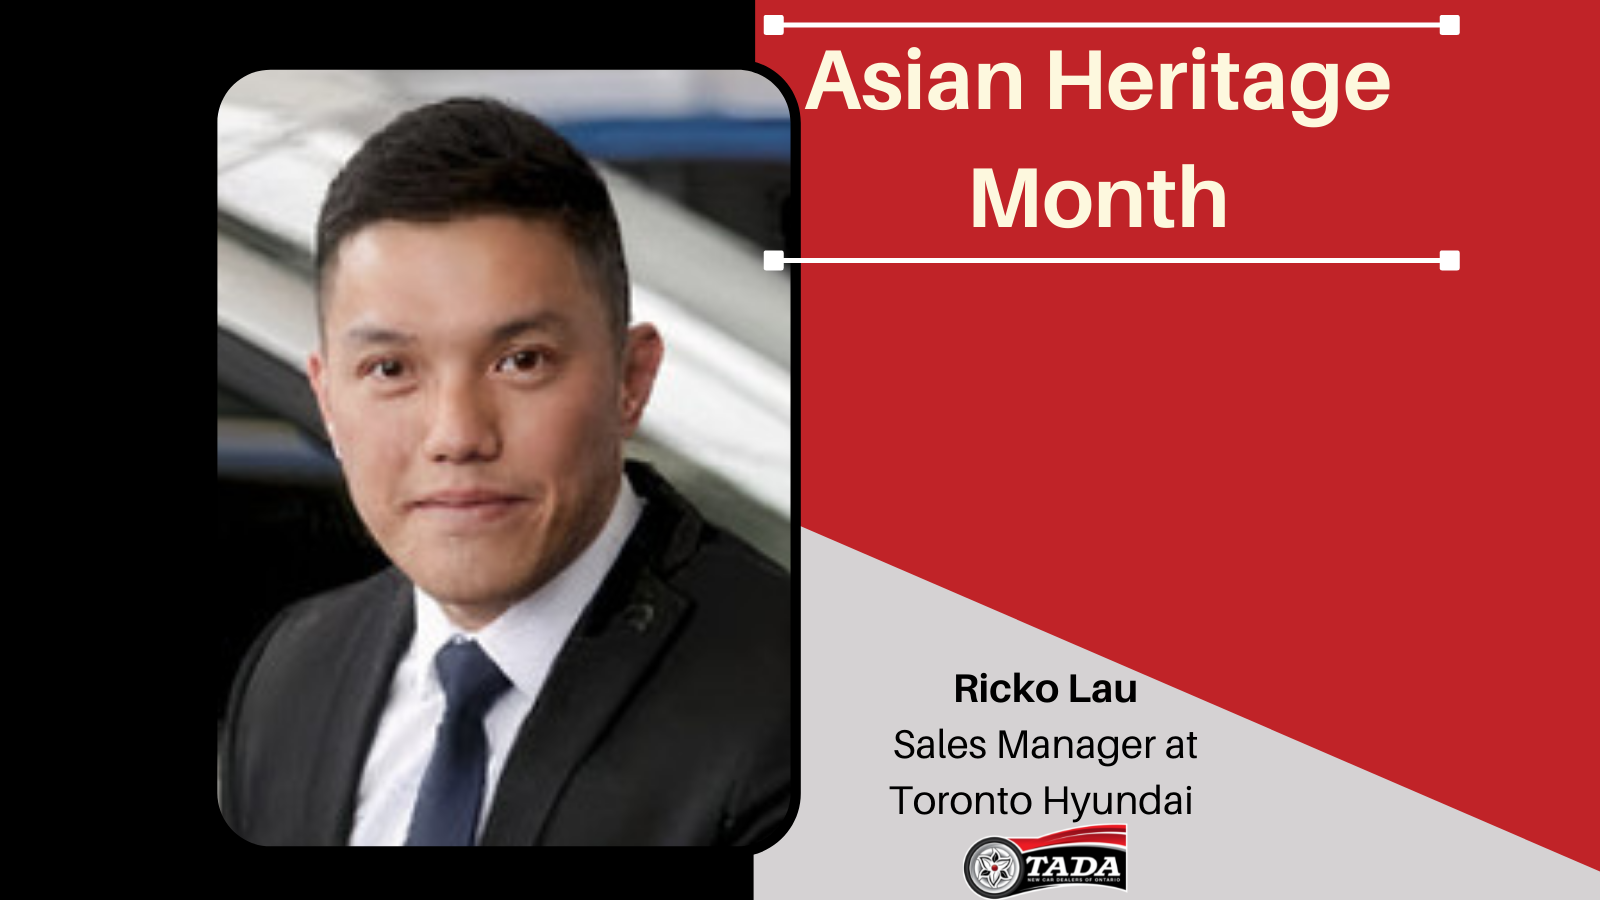 Asian Heritage Month - Ricko Lau: Sales Manager at Toronto Hyundai